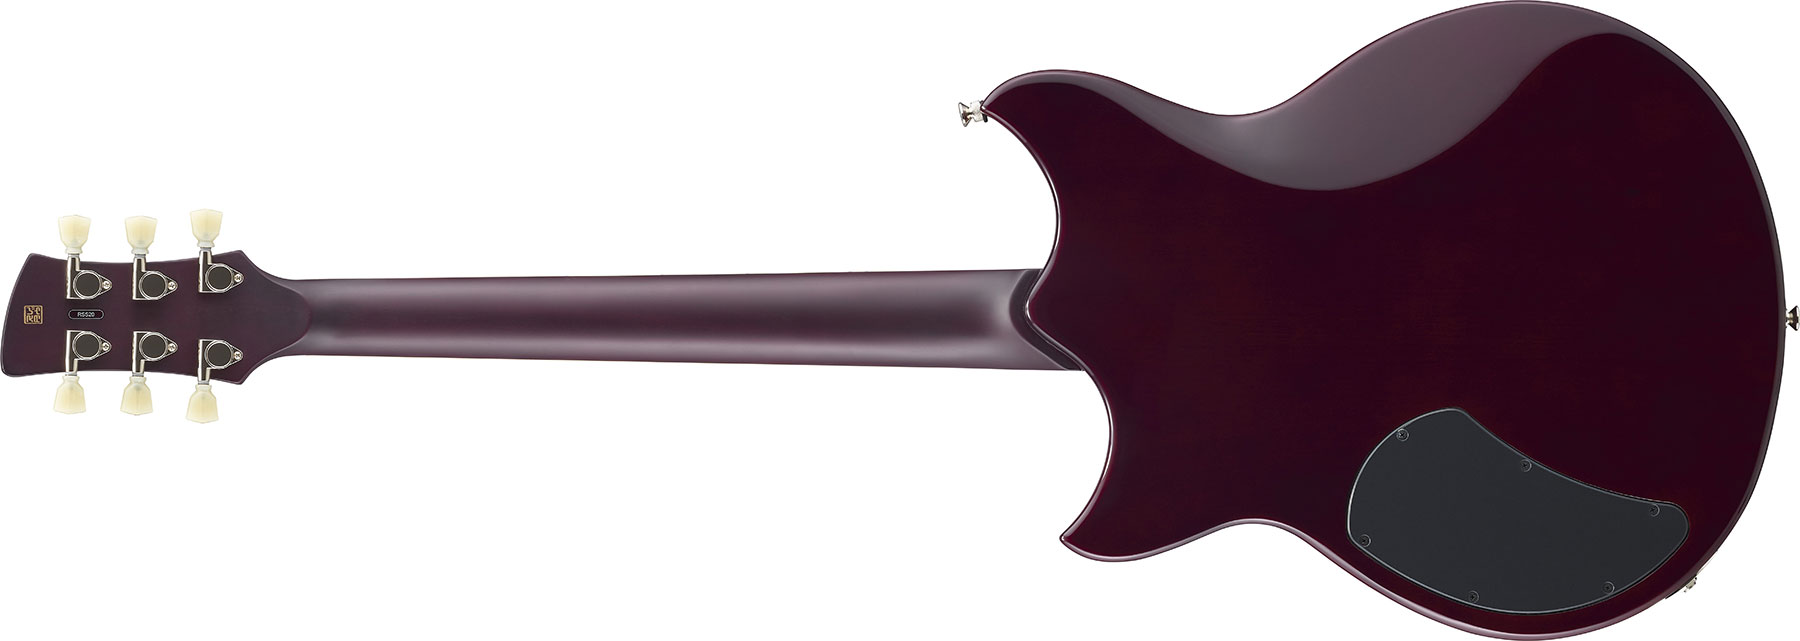 Yamaha Rss20 Revstar Standard Hh Ht Rw - Hot Merlot - Guitarra eléctrica de doble corte - Variation 2